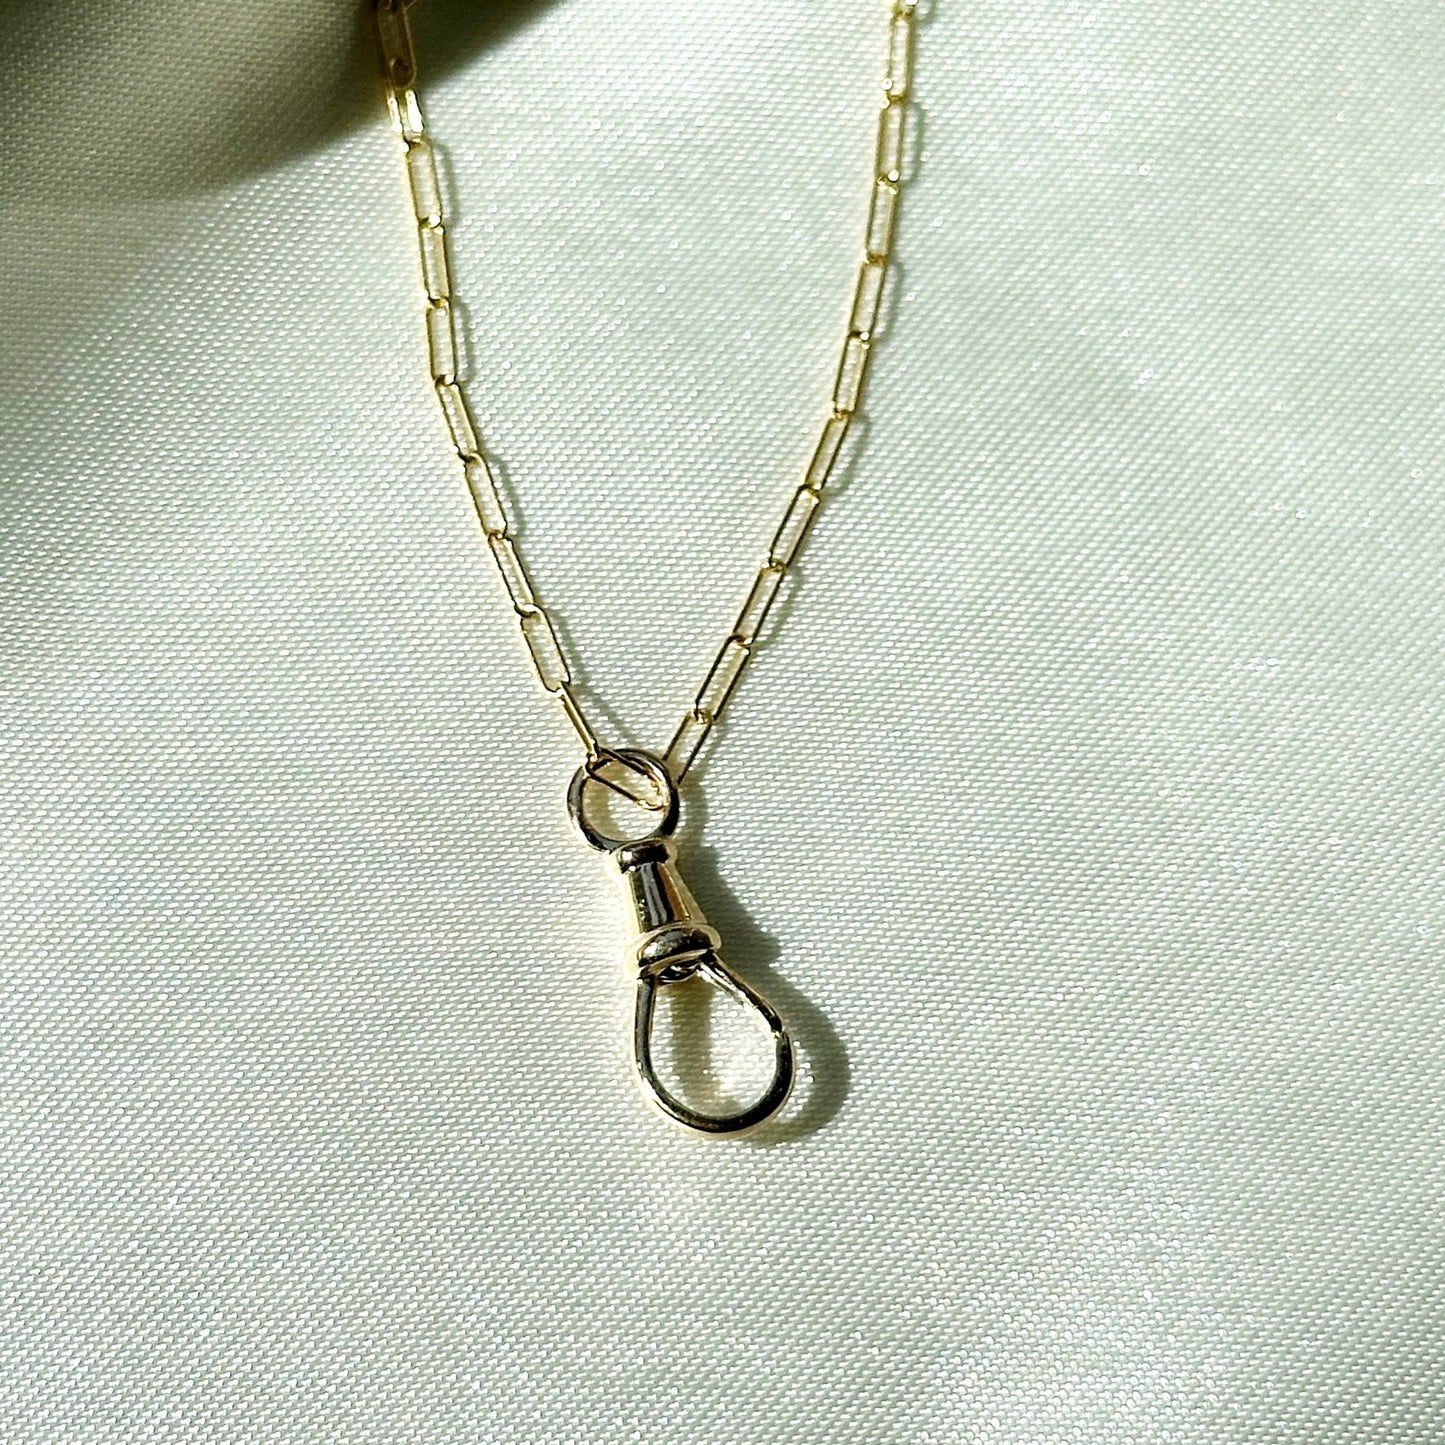 solid gold charm holder necklace - custom vintage charm necklace